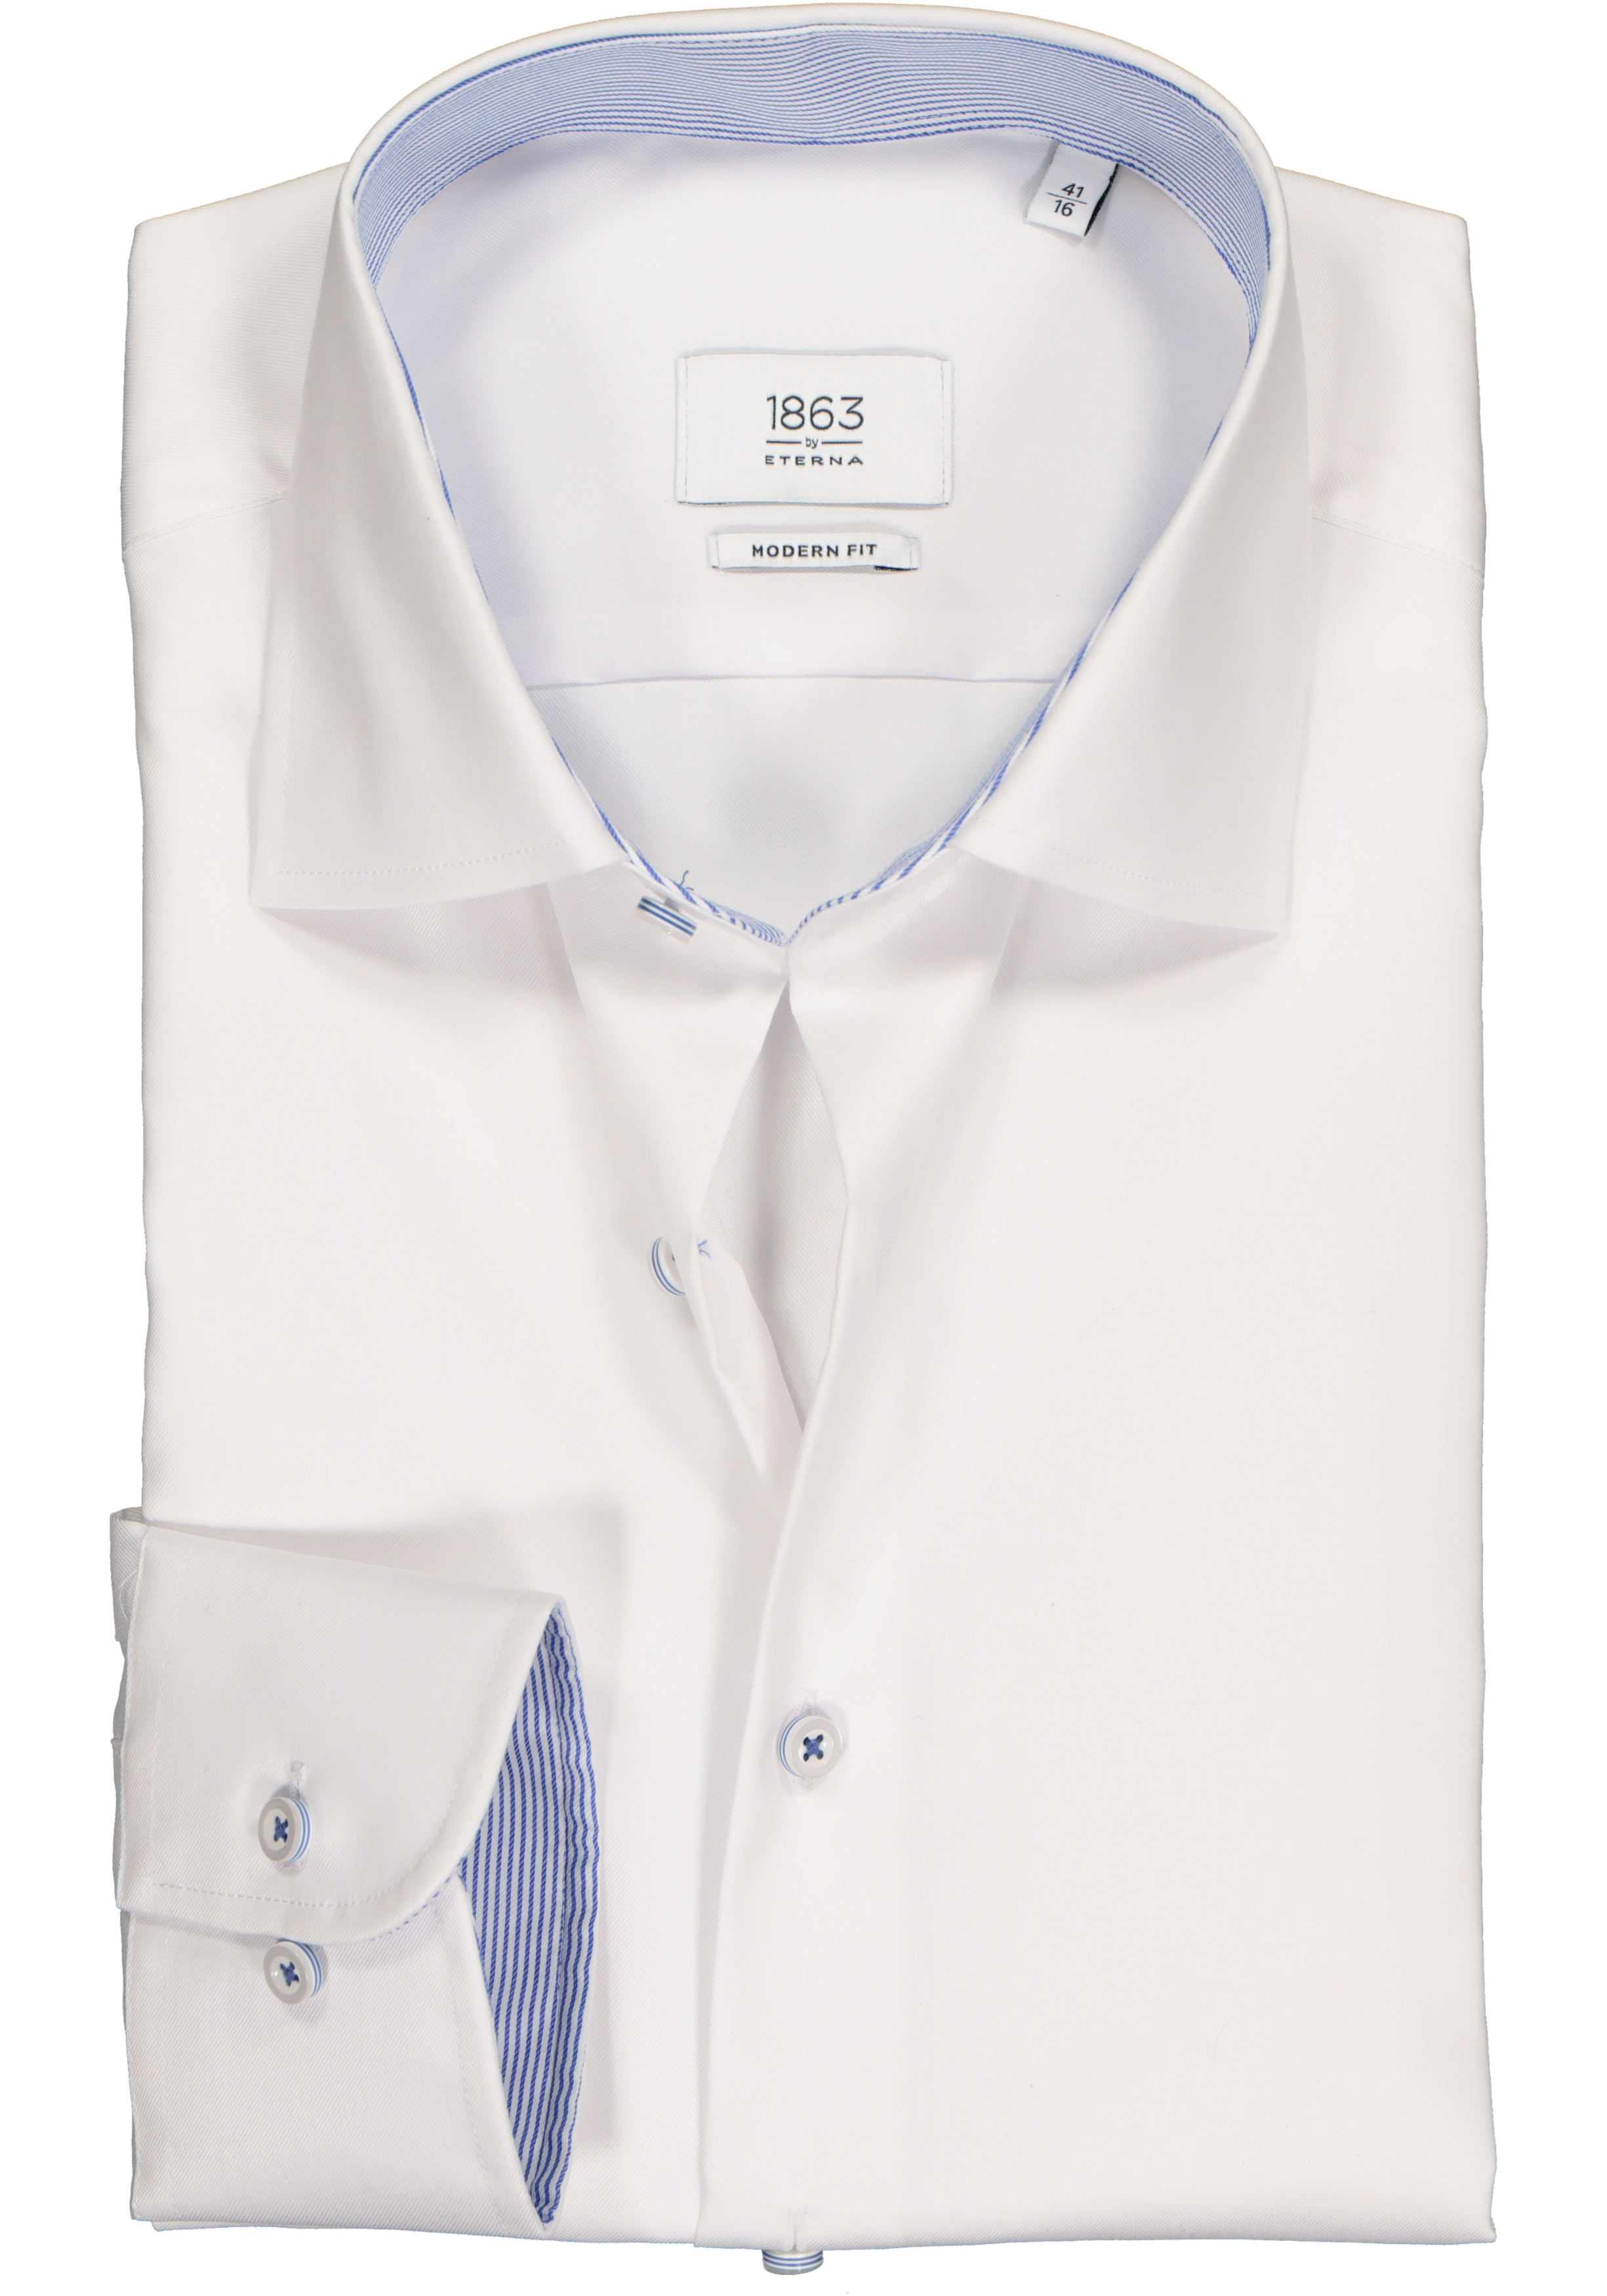 ETERNA 1863 modern fit premium overhemd, 2-ply twill heren overhemd, wit (contrast)